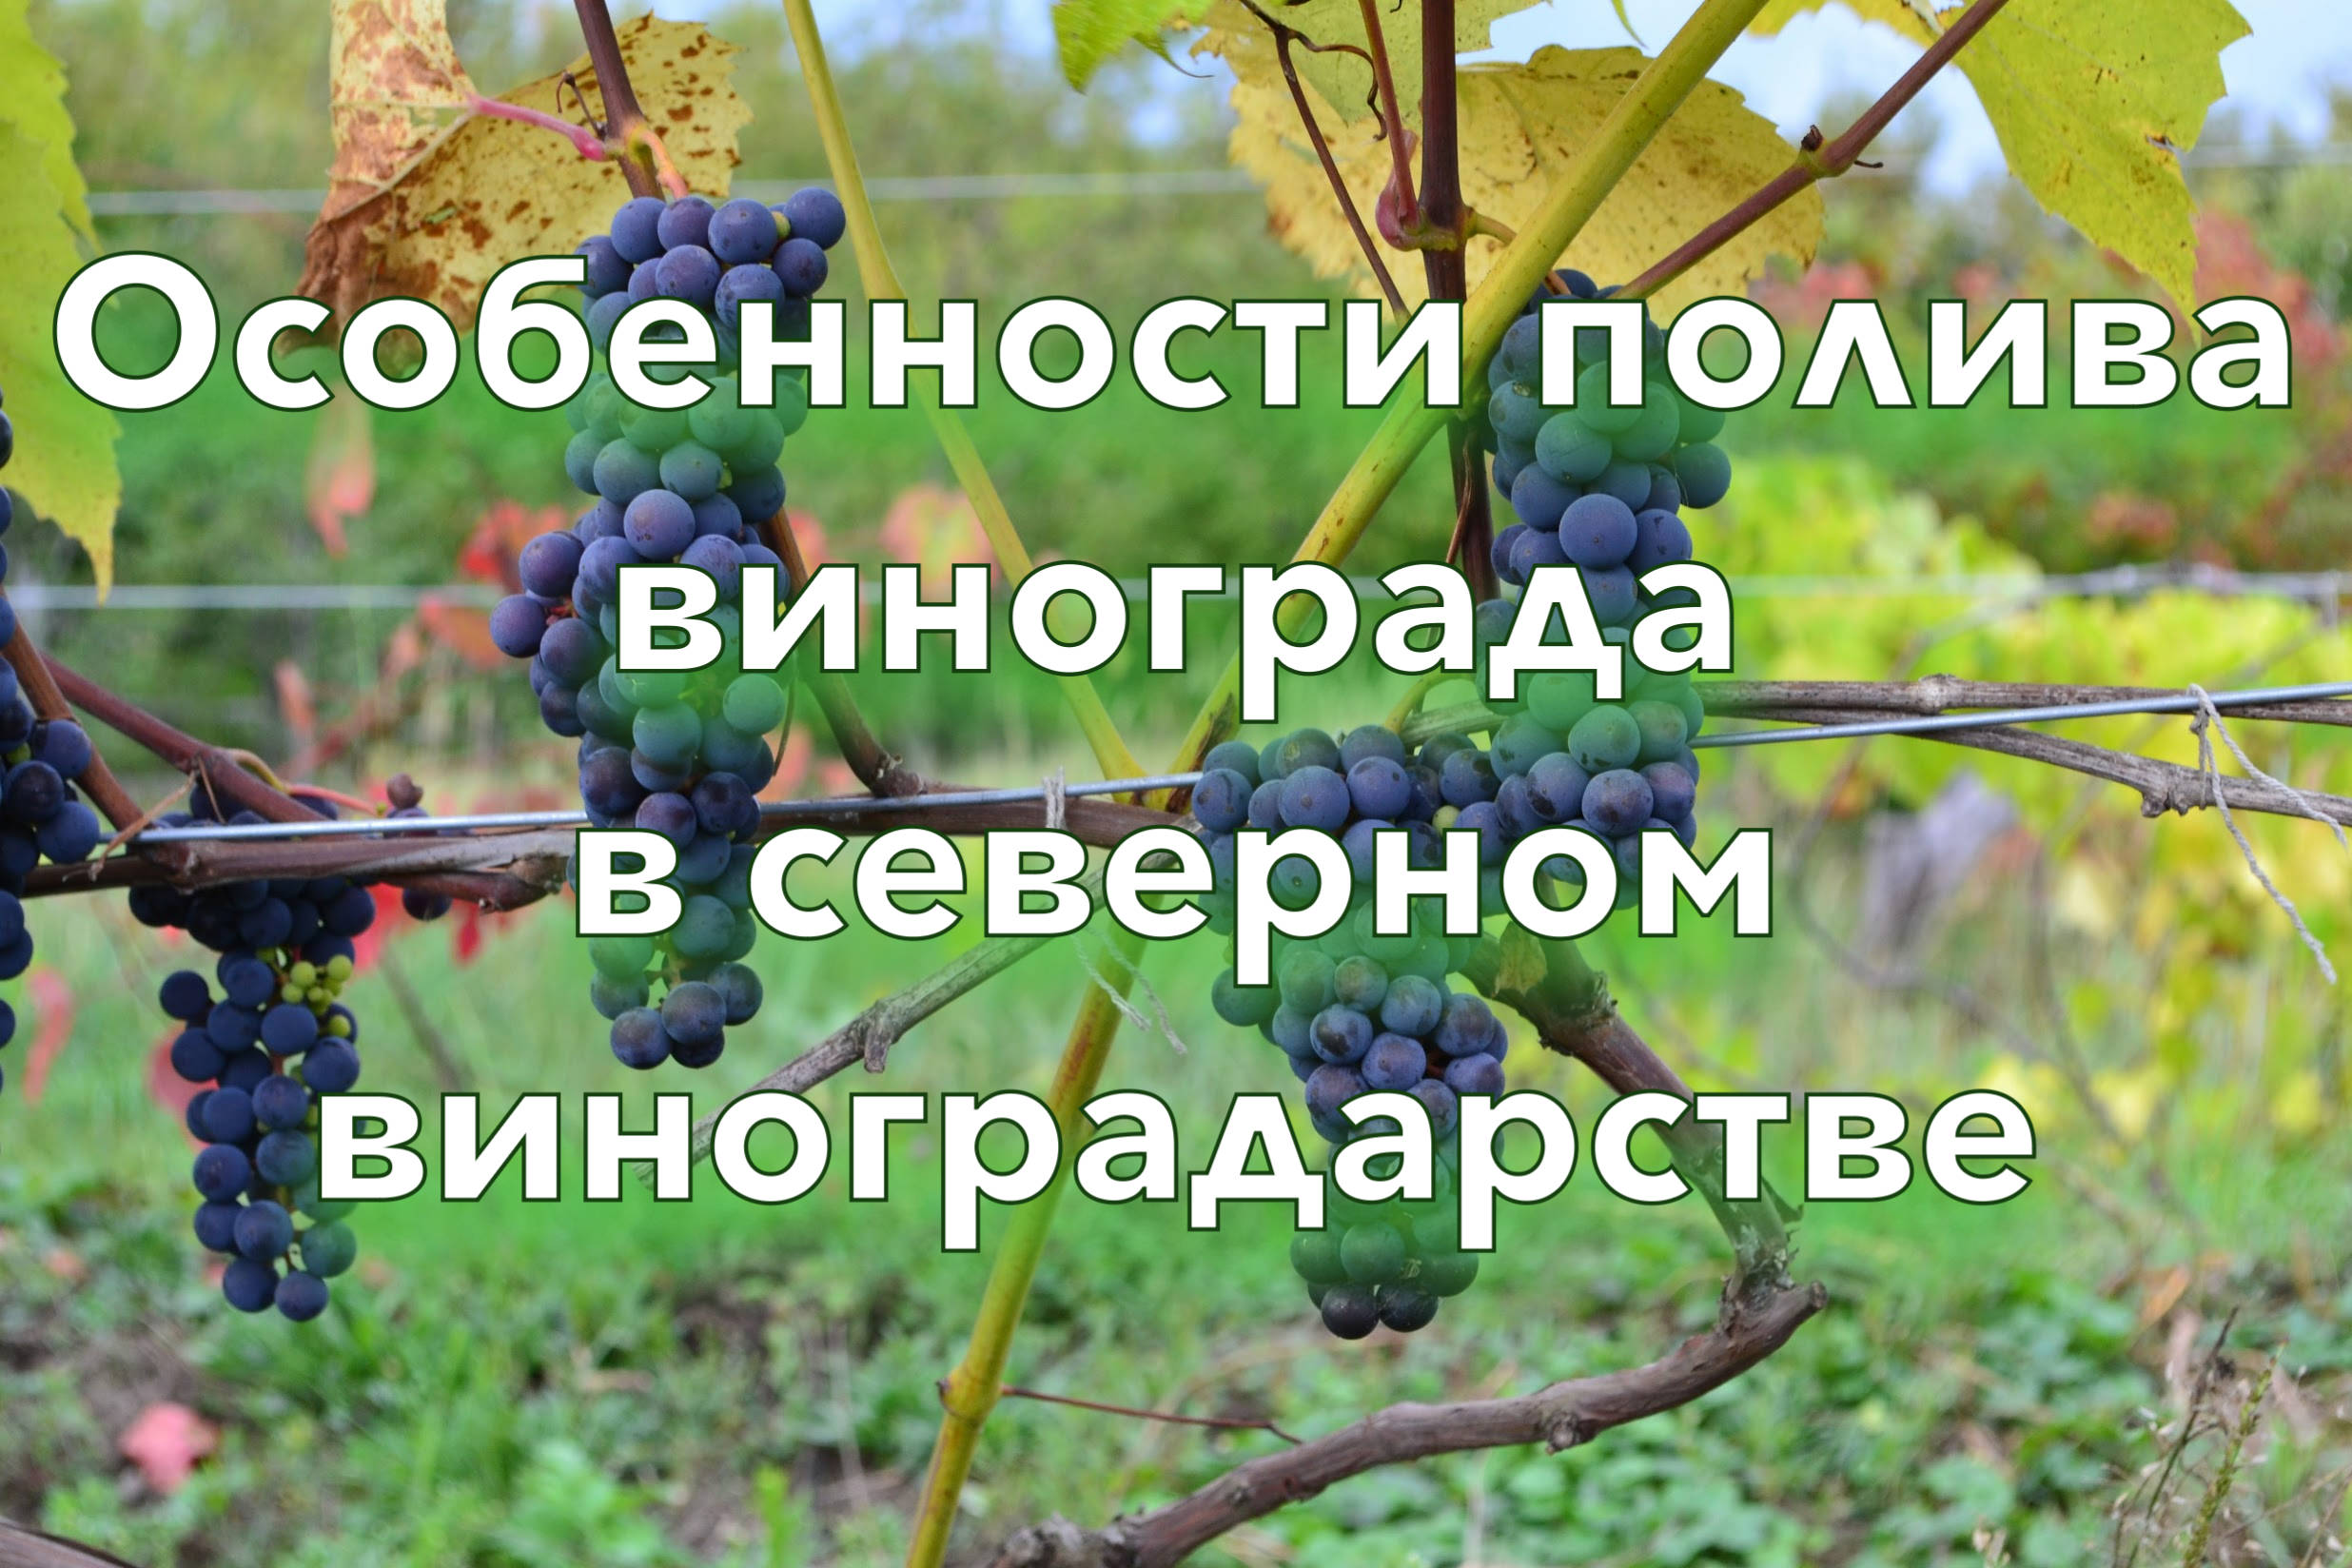 Особенности полива винограда в северном виноградарстве.